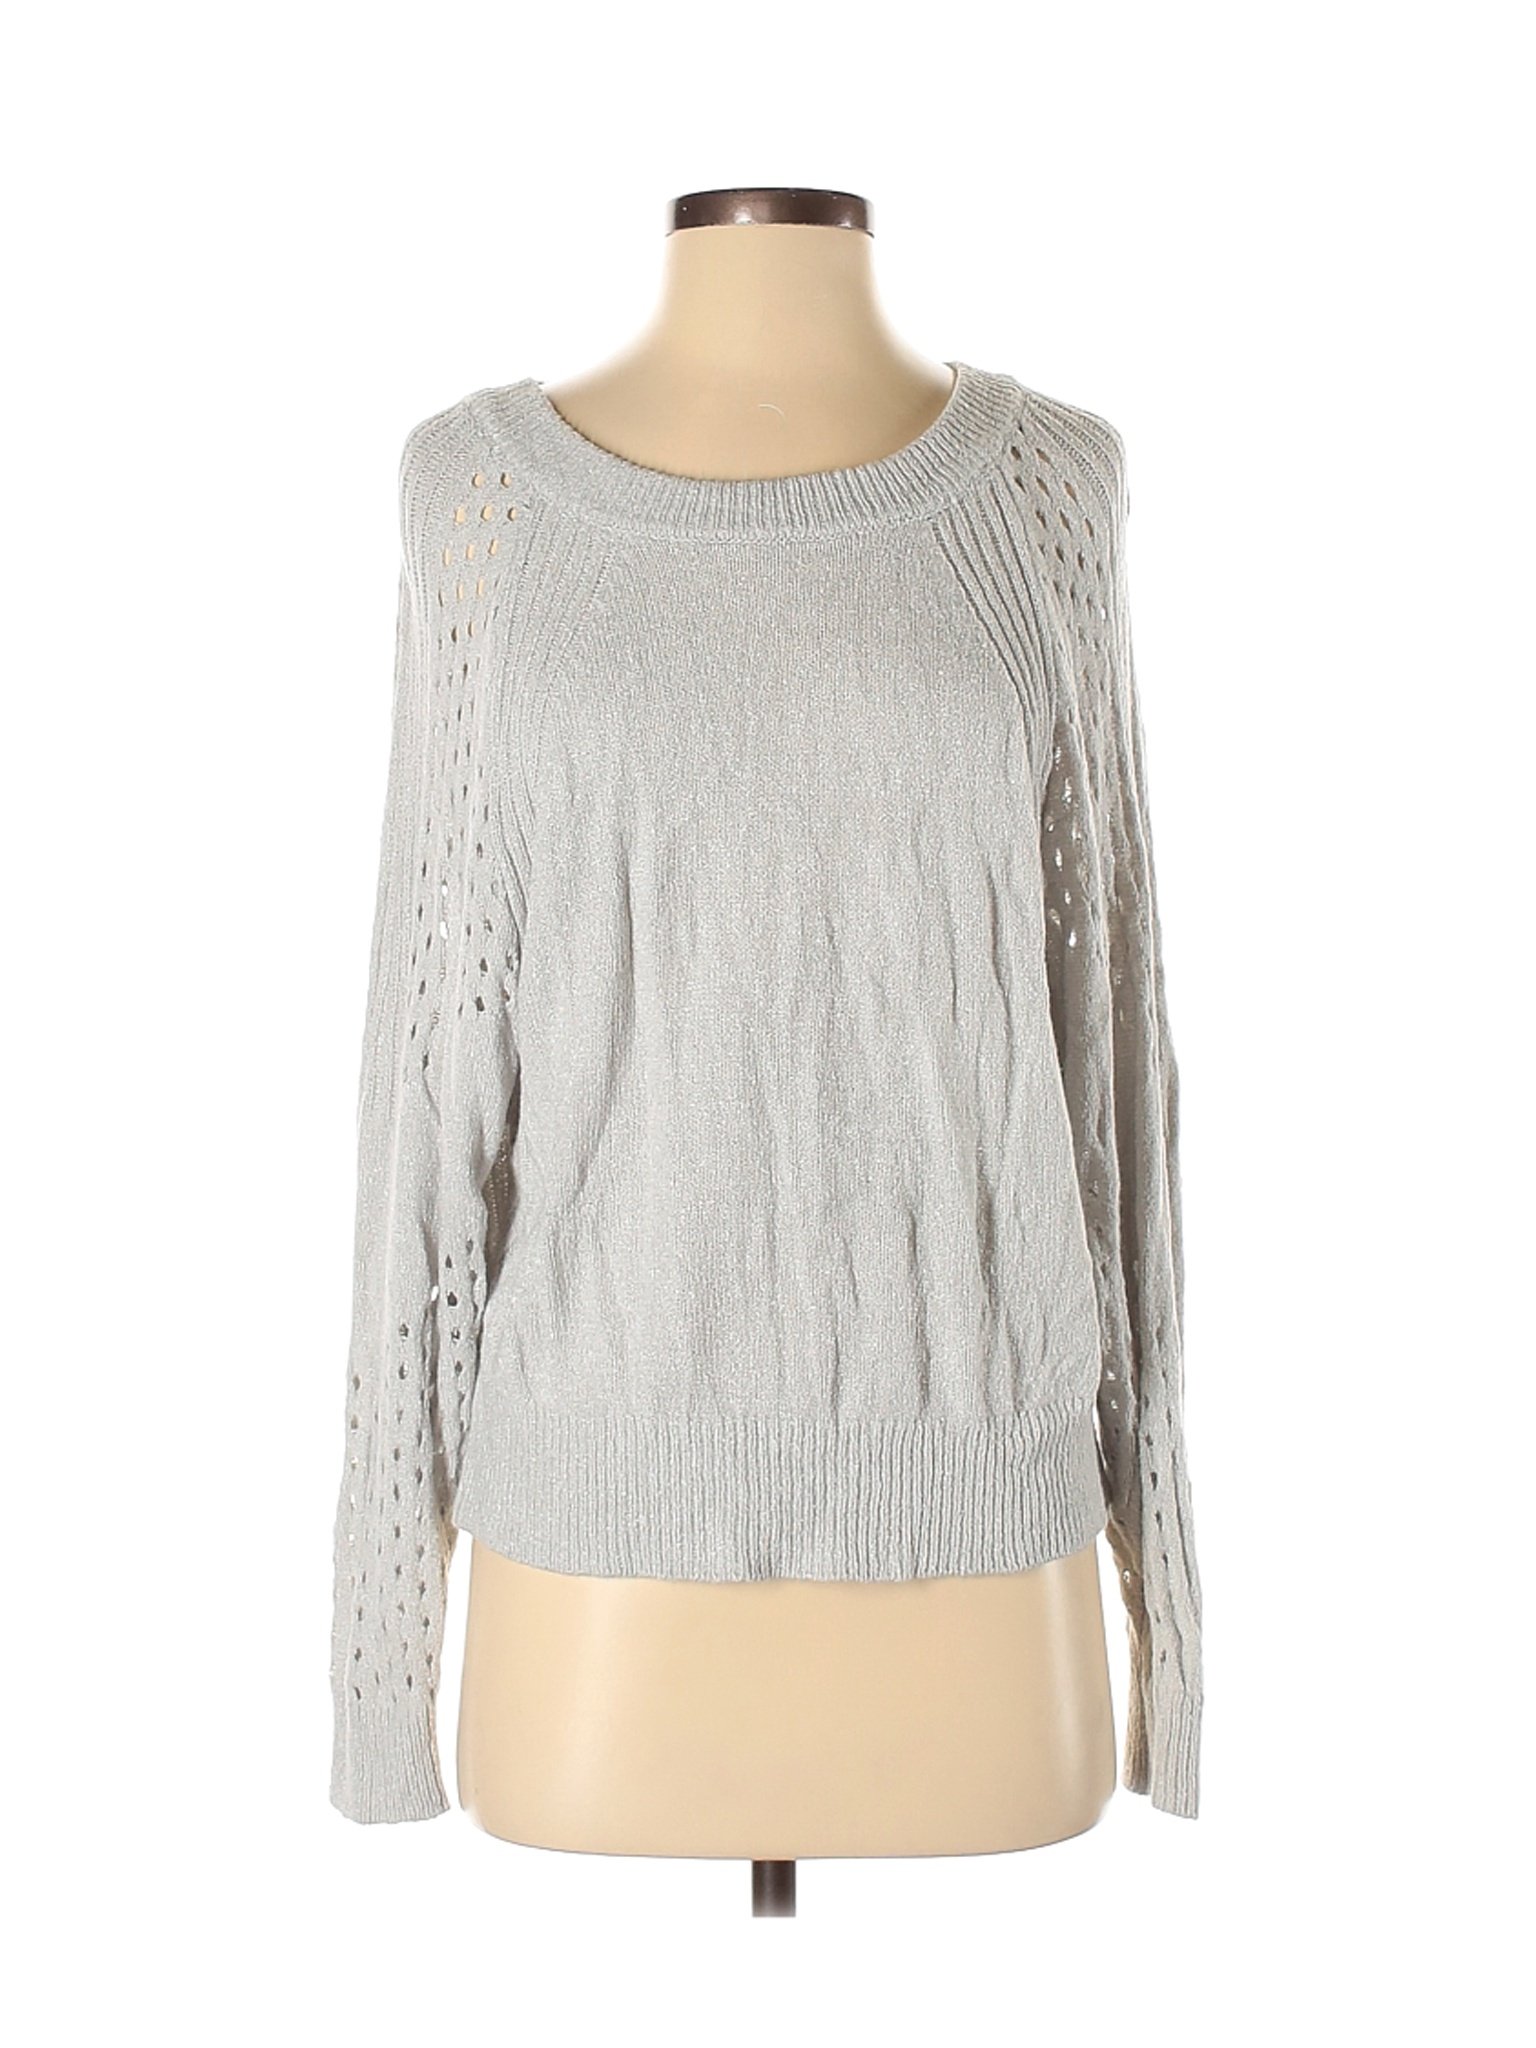 Express Women Gray Pullover Sweater S | eBay